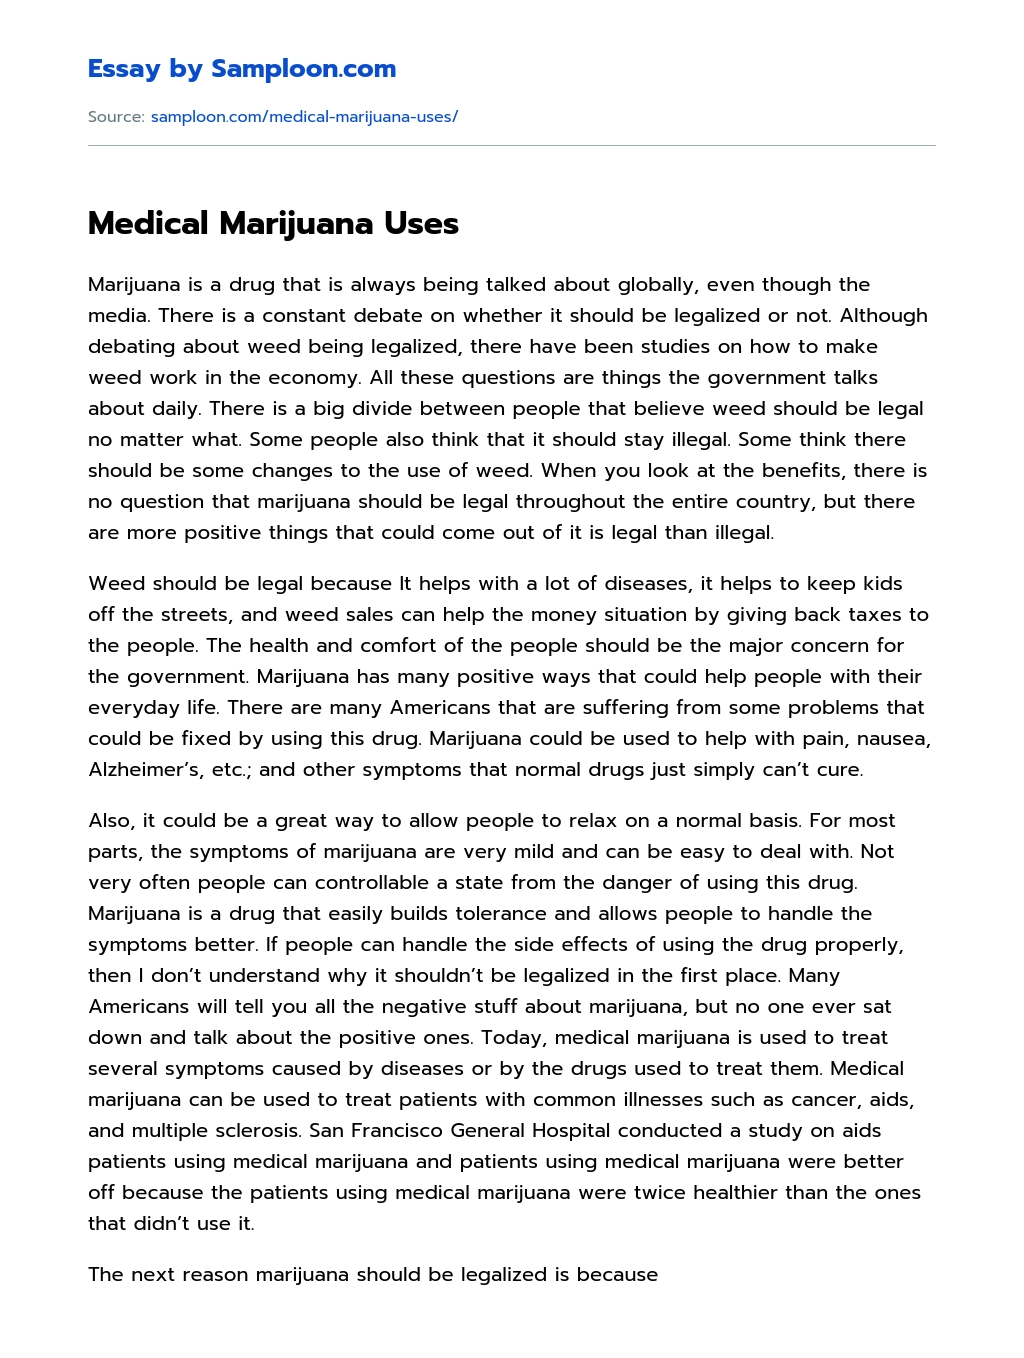 Medical Marijuana Uses essay